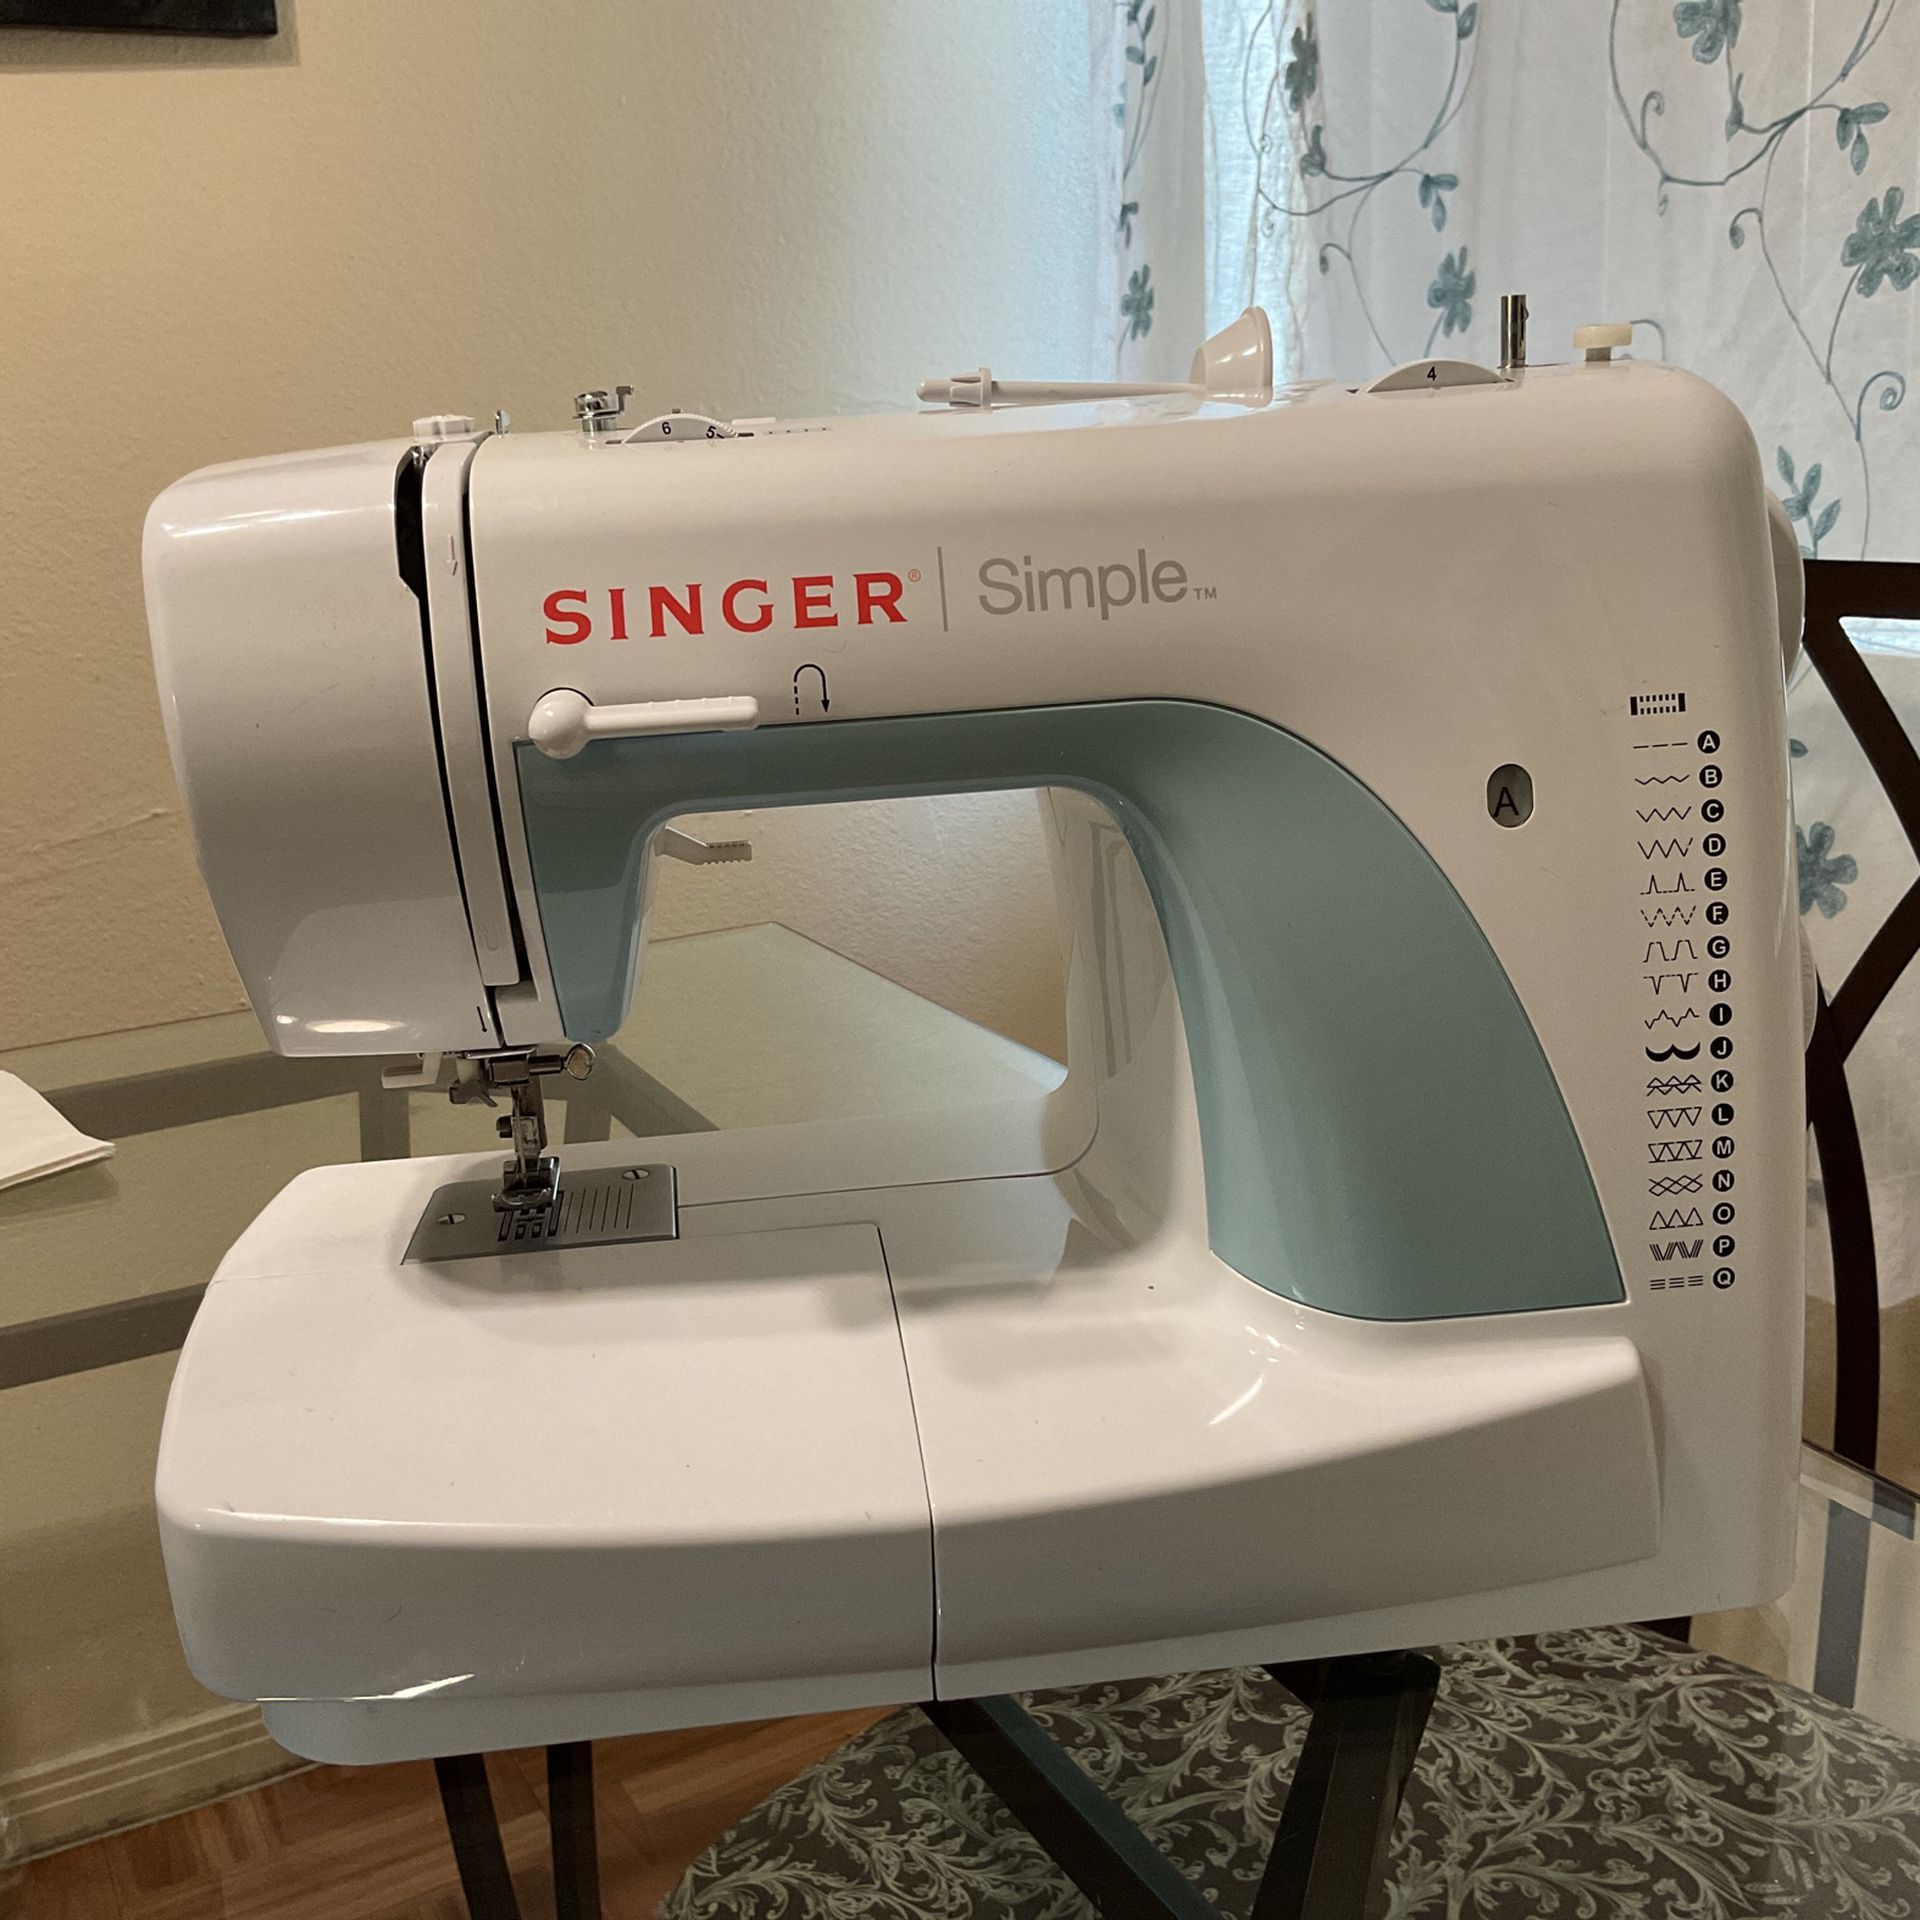 Singer Model 3116 Simple Sewing Machine Pre Owned